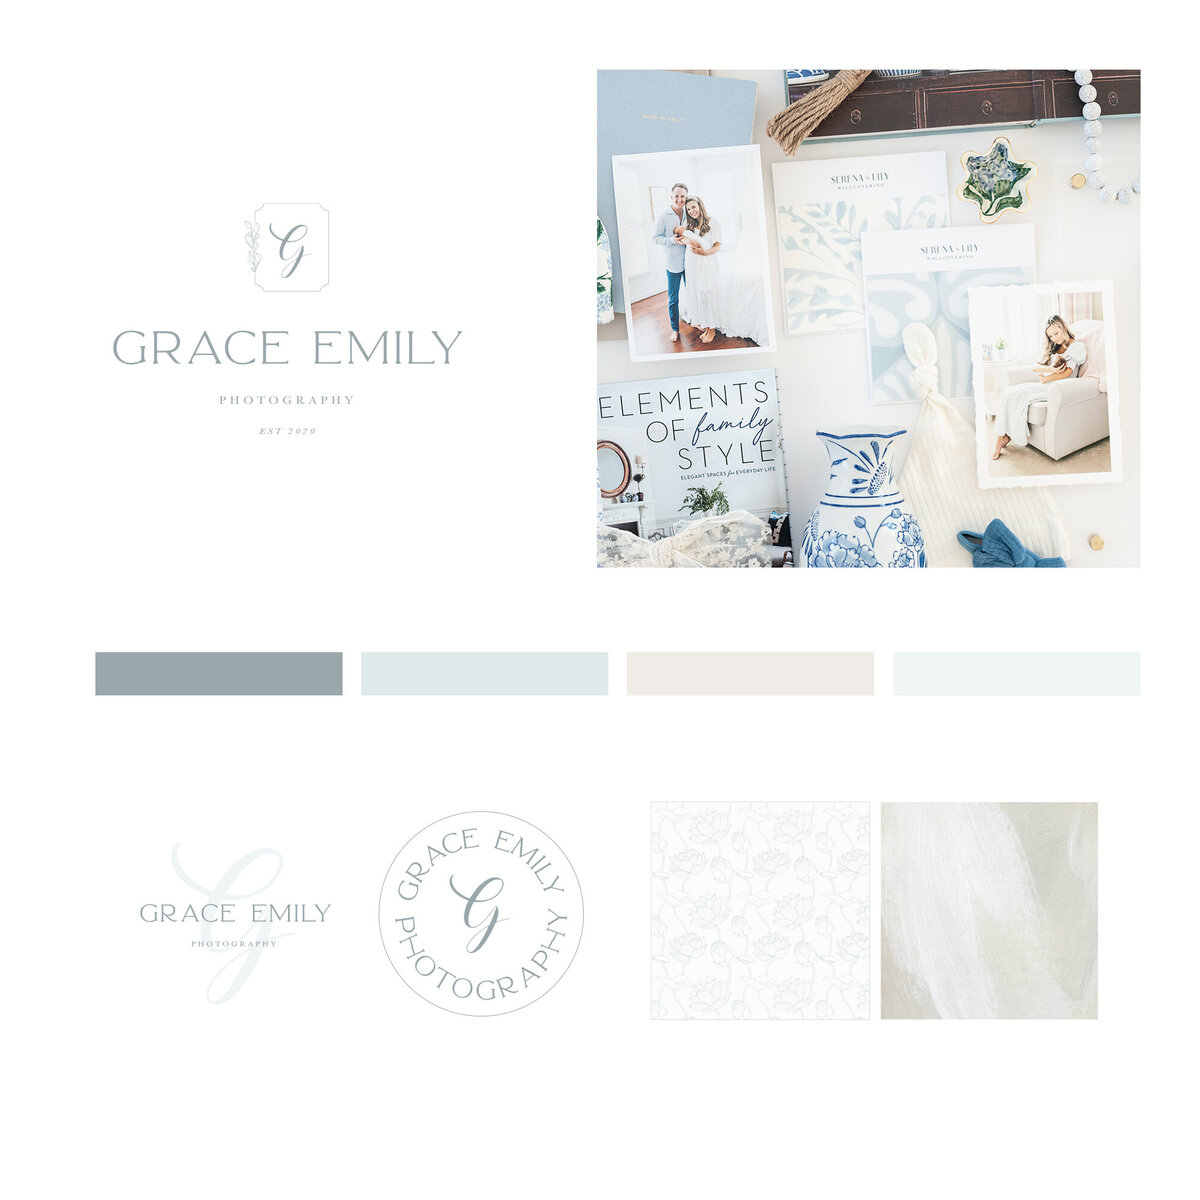 GraceEmily-BrandBoardpsd